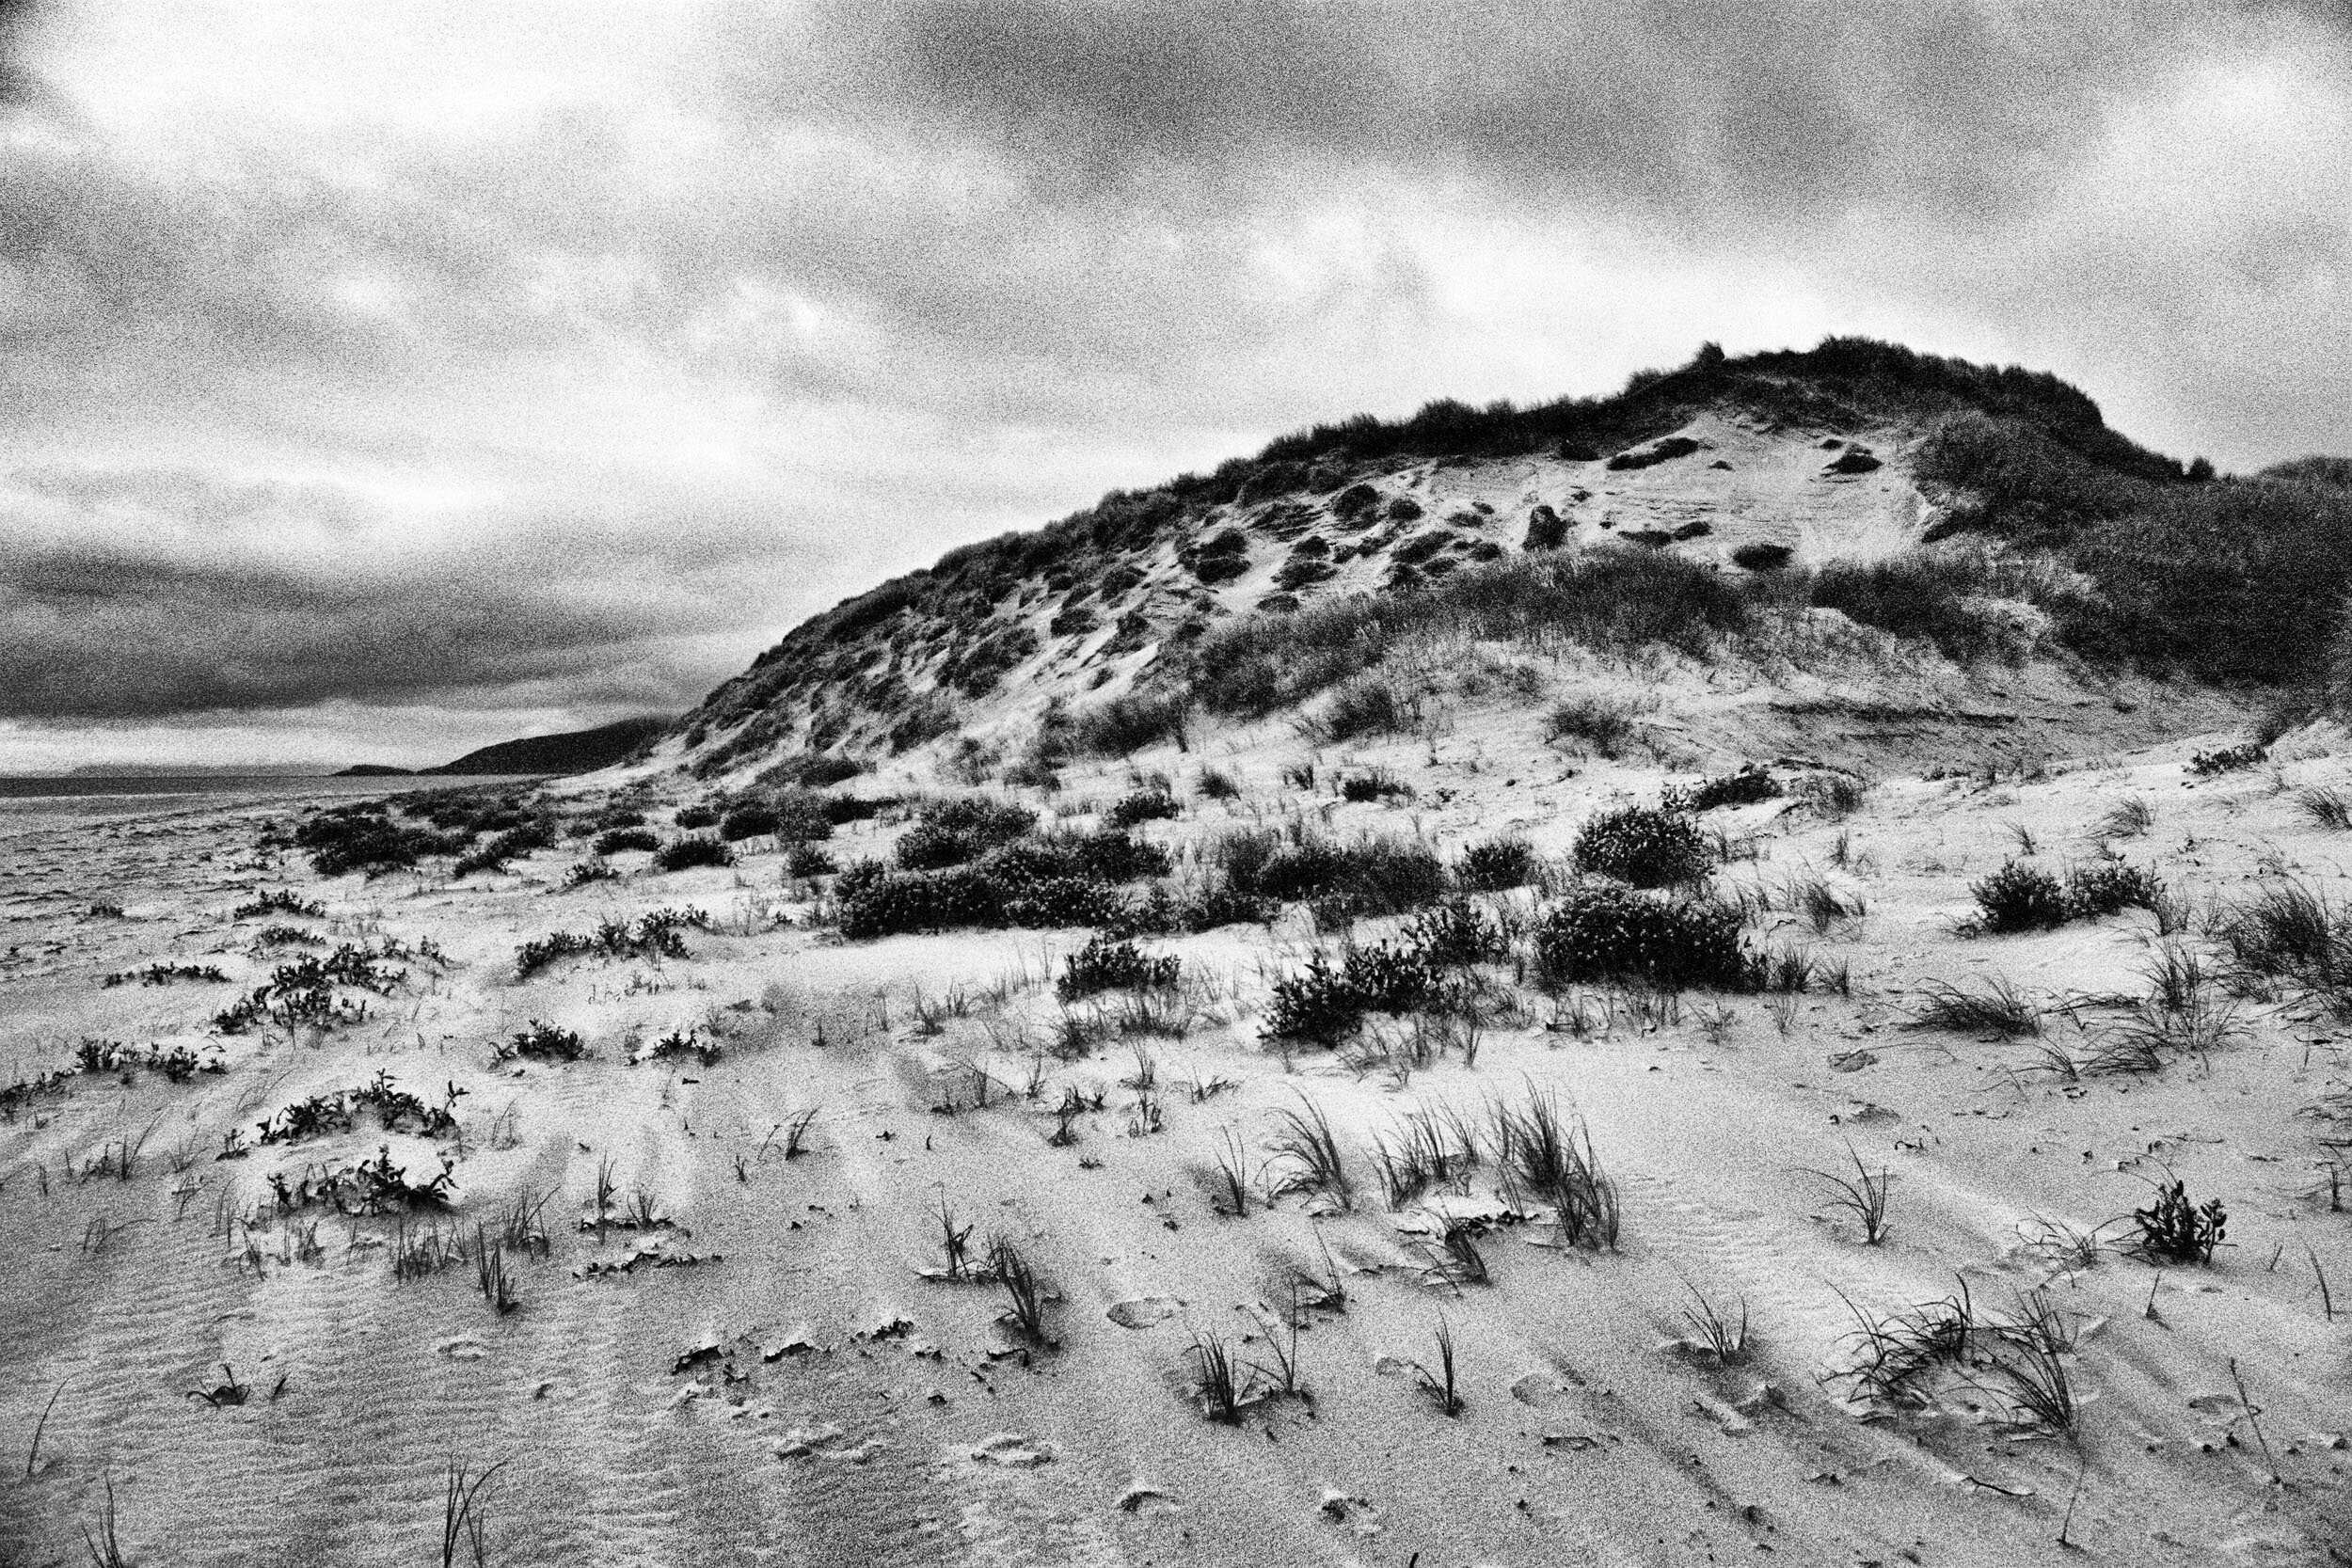  Dunes and Wind, West Beach, Isle of Berneray, 2018 